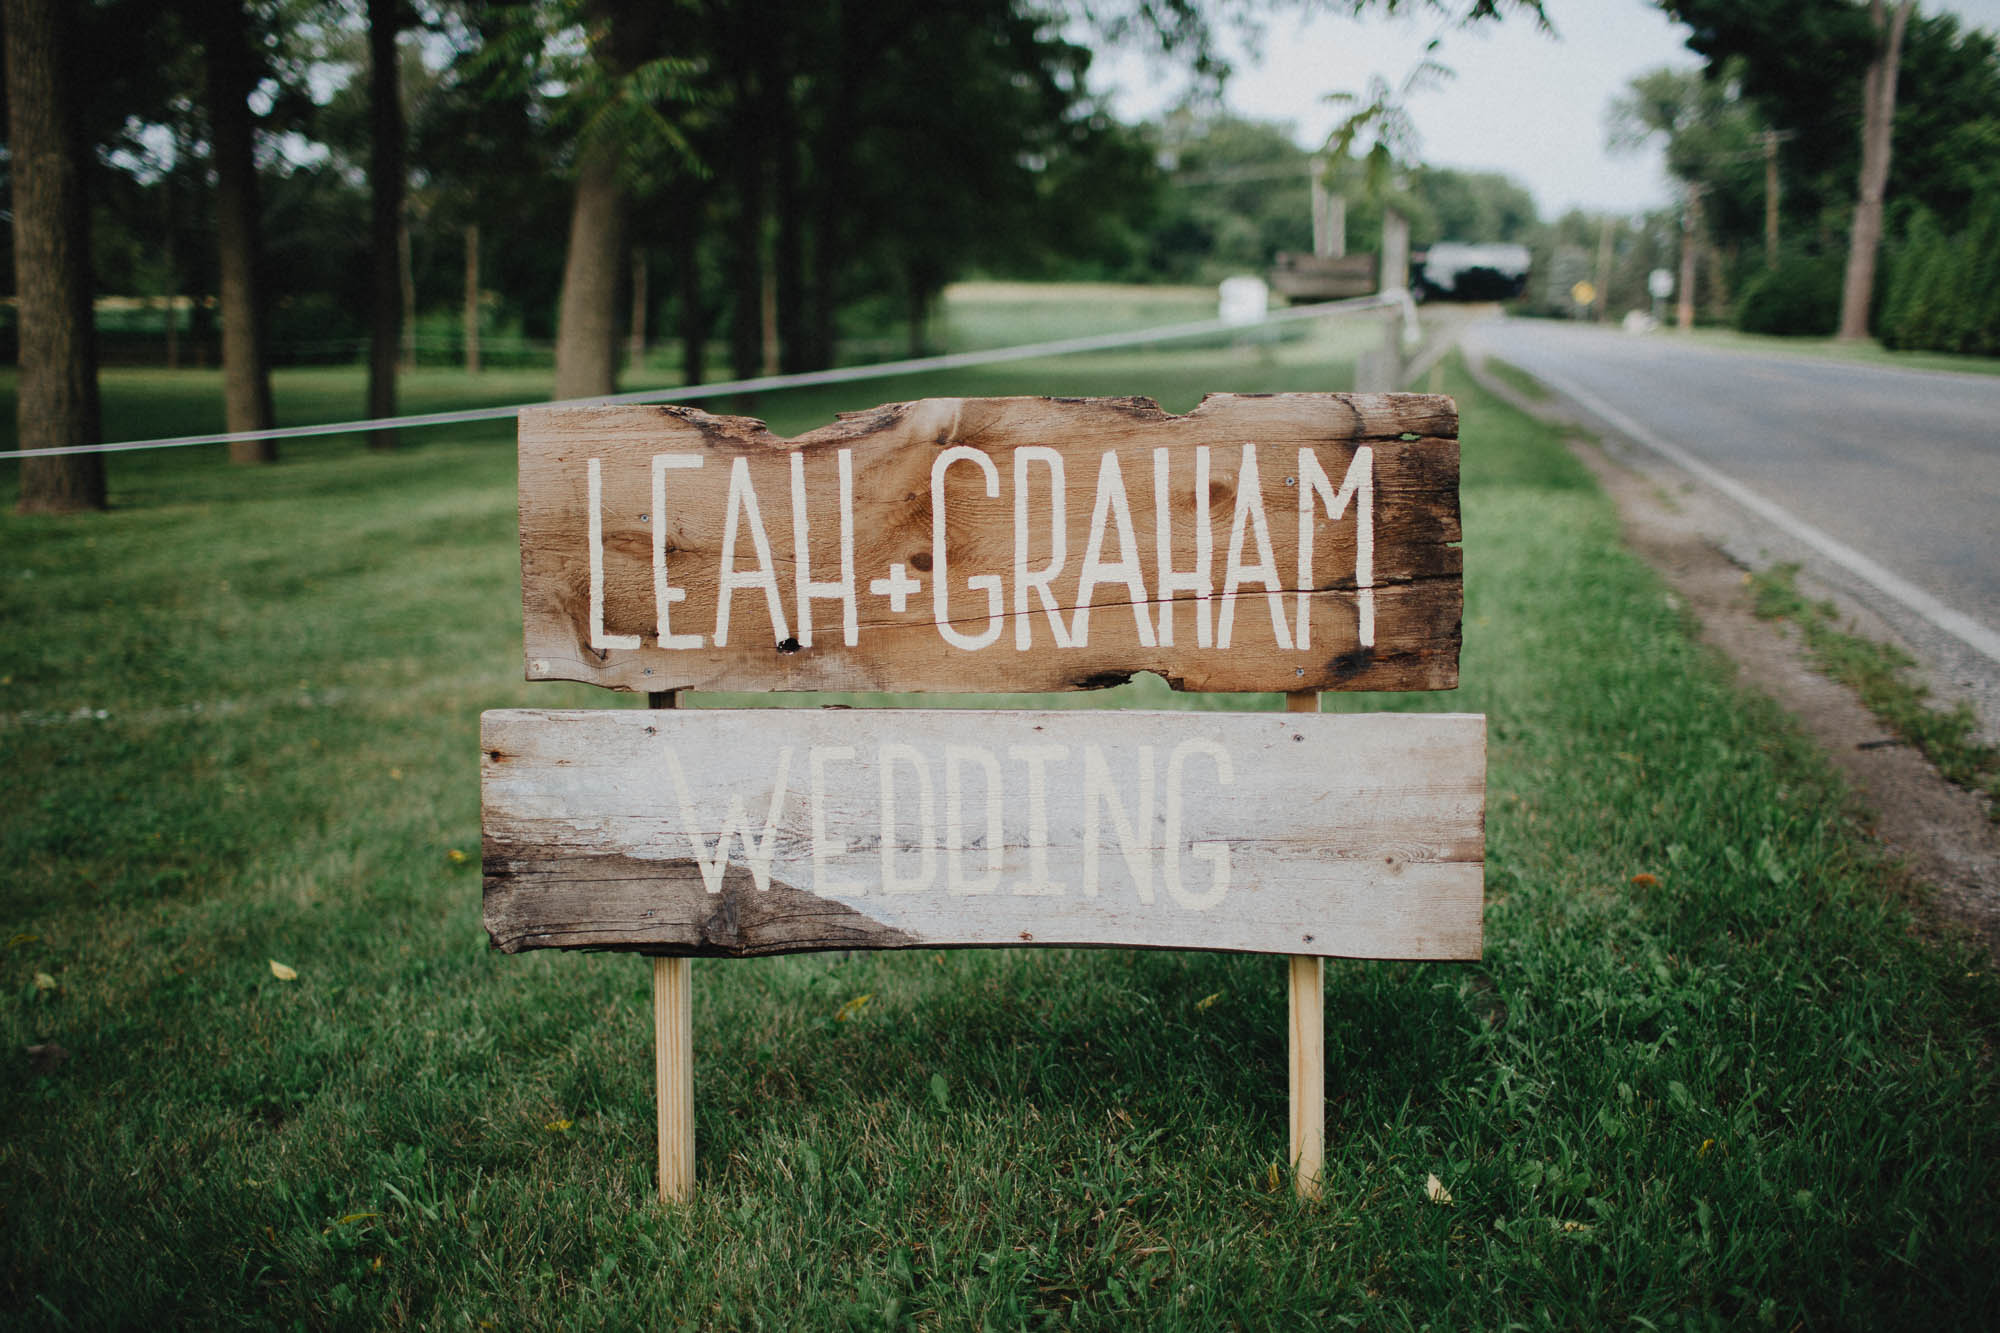 Leah-Graham-Michigan-Outdoor-DIY-Wedding-005@2x.jpg